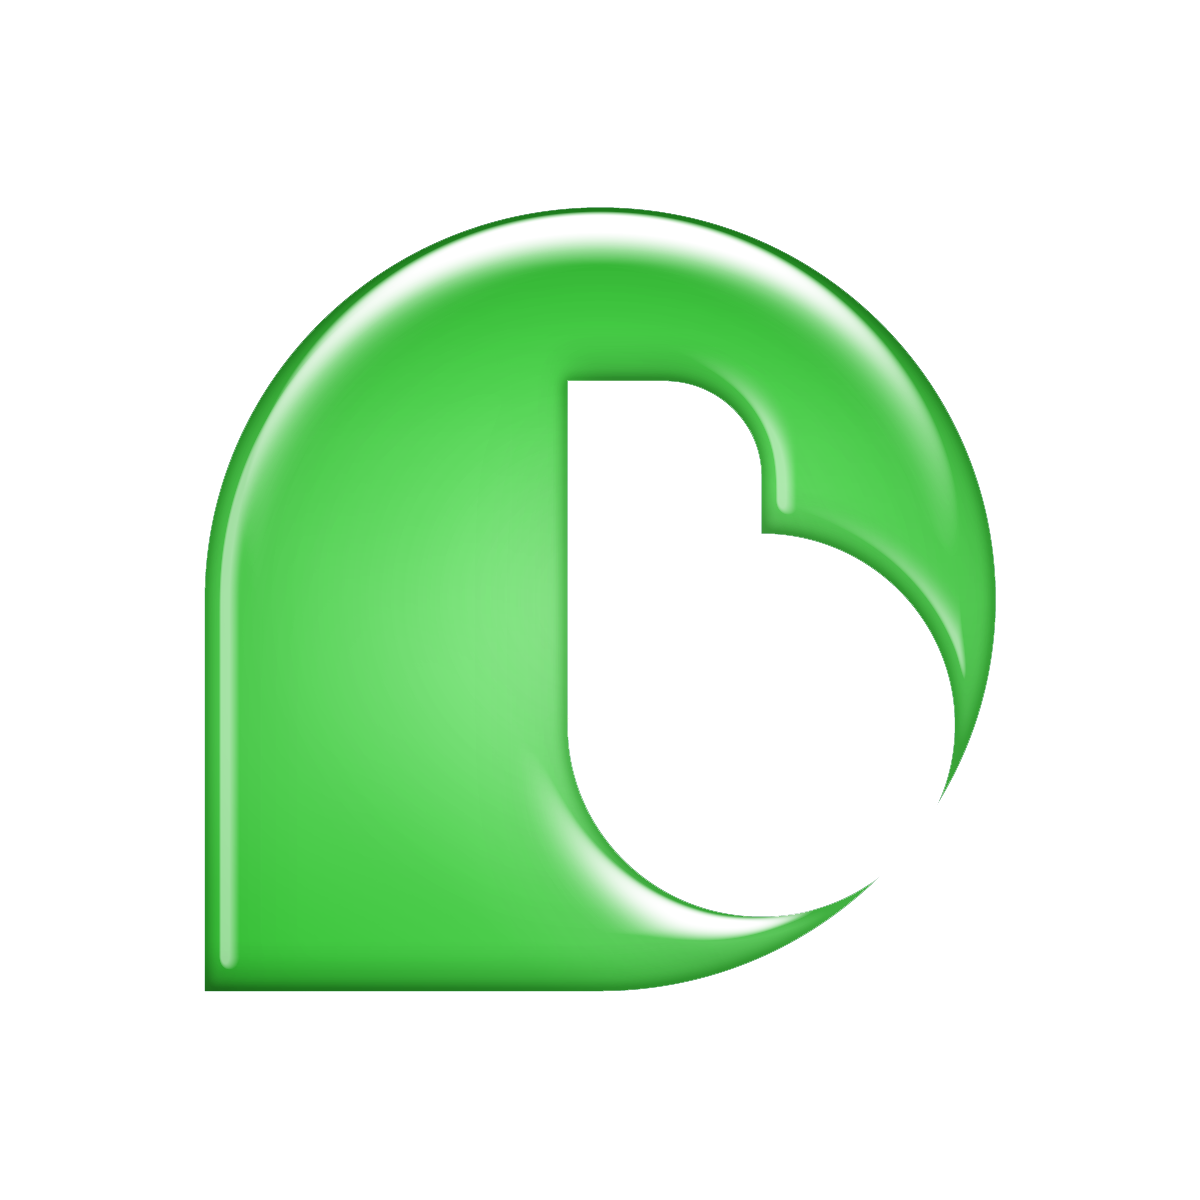 Logo brand-kommunikation Webdesign